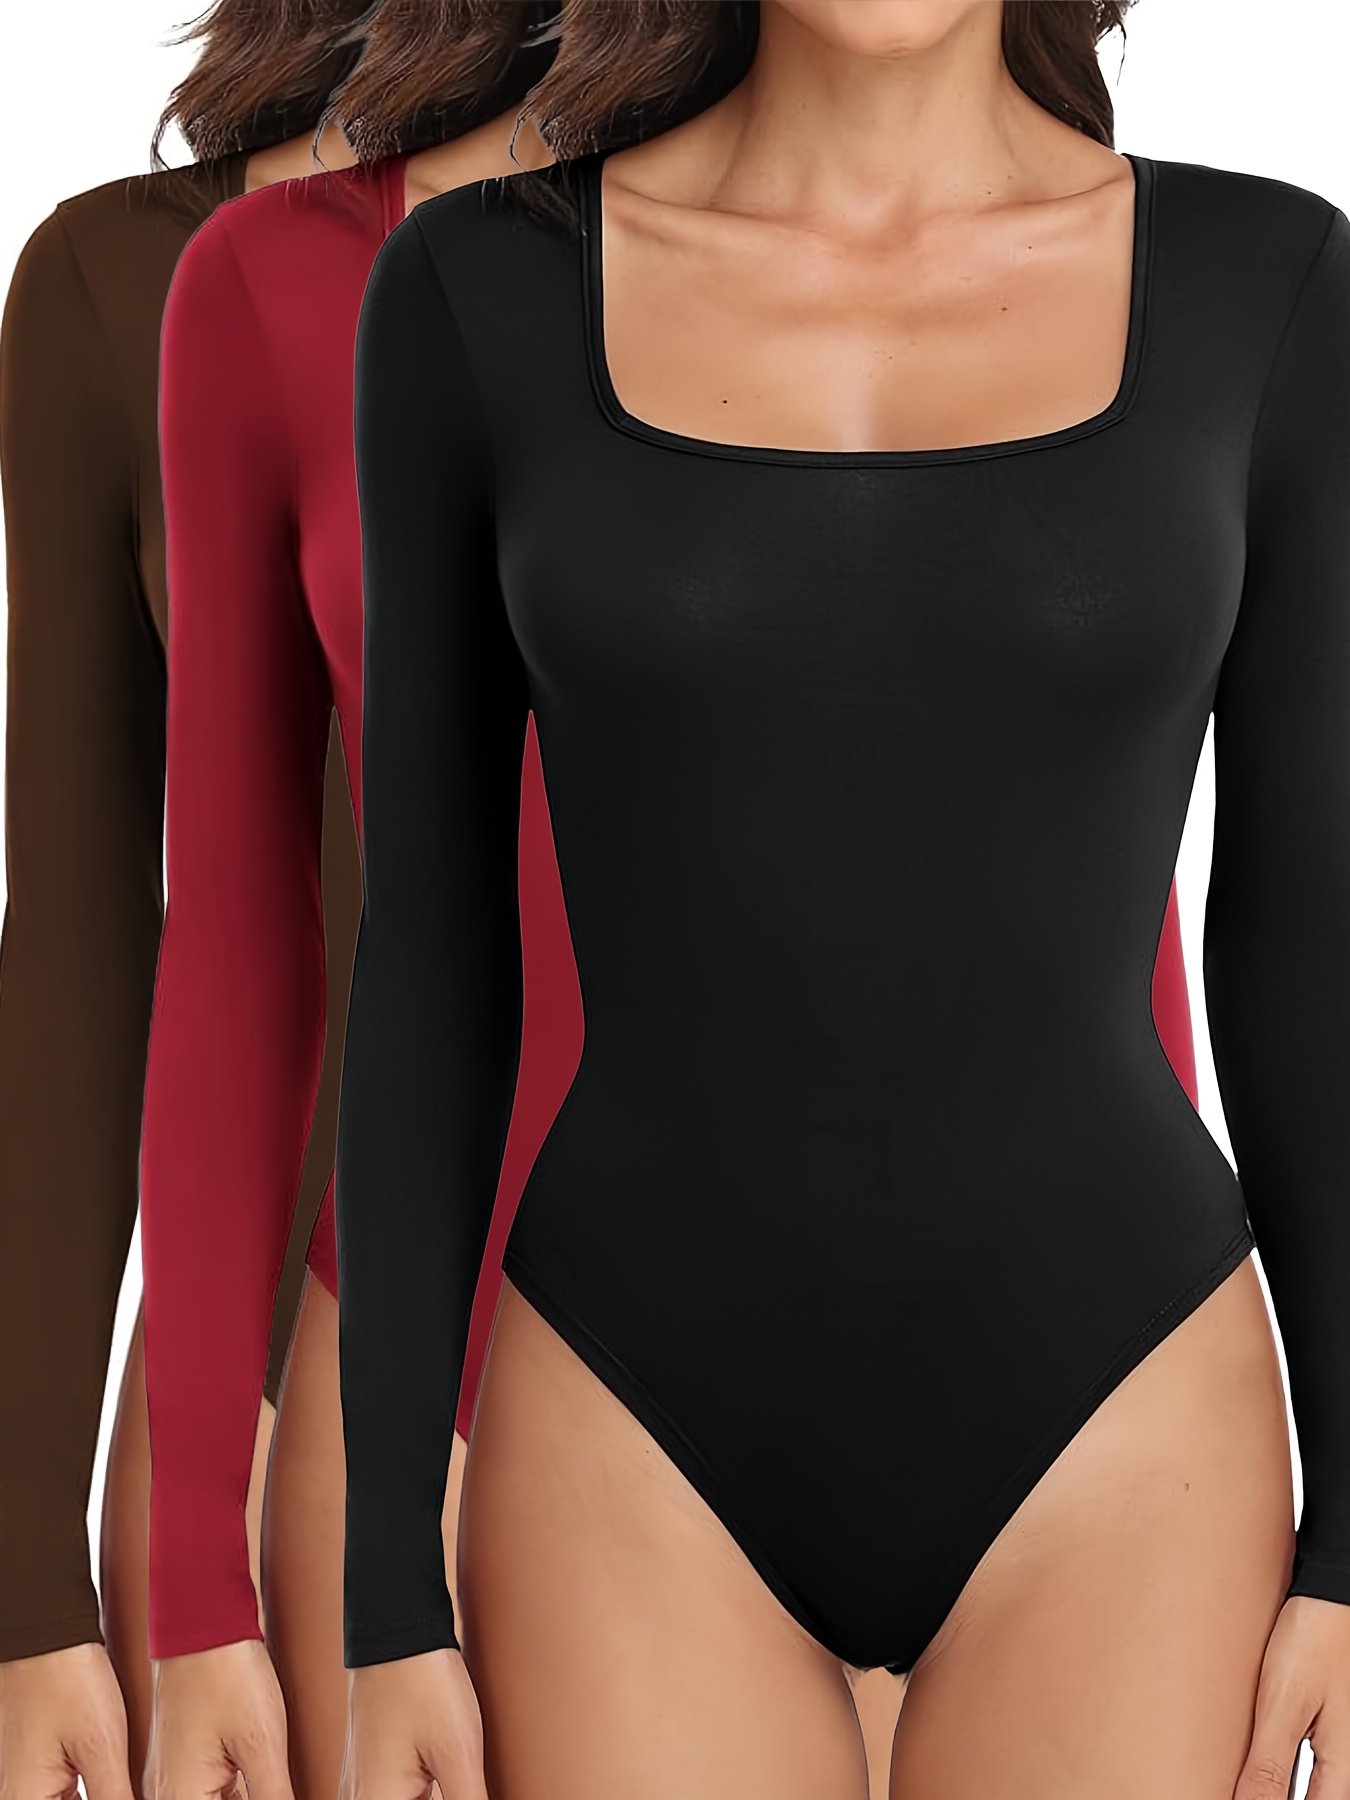 Shop Temu For Women's Bodysuits - Free Returns Within 90 Days - Temu